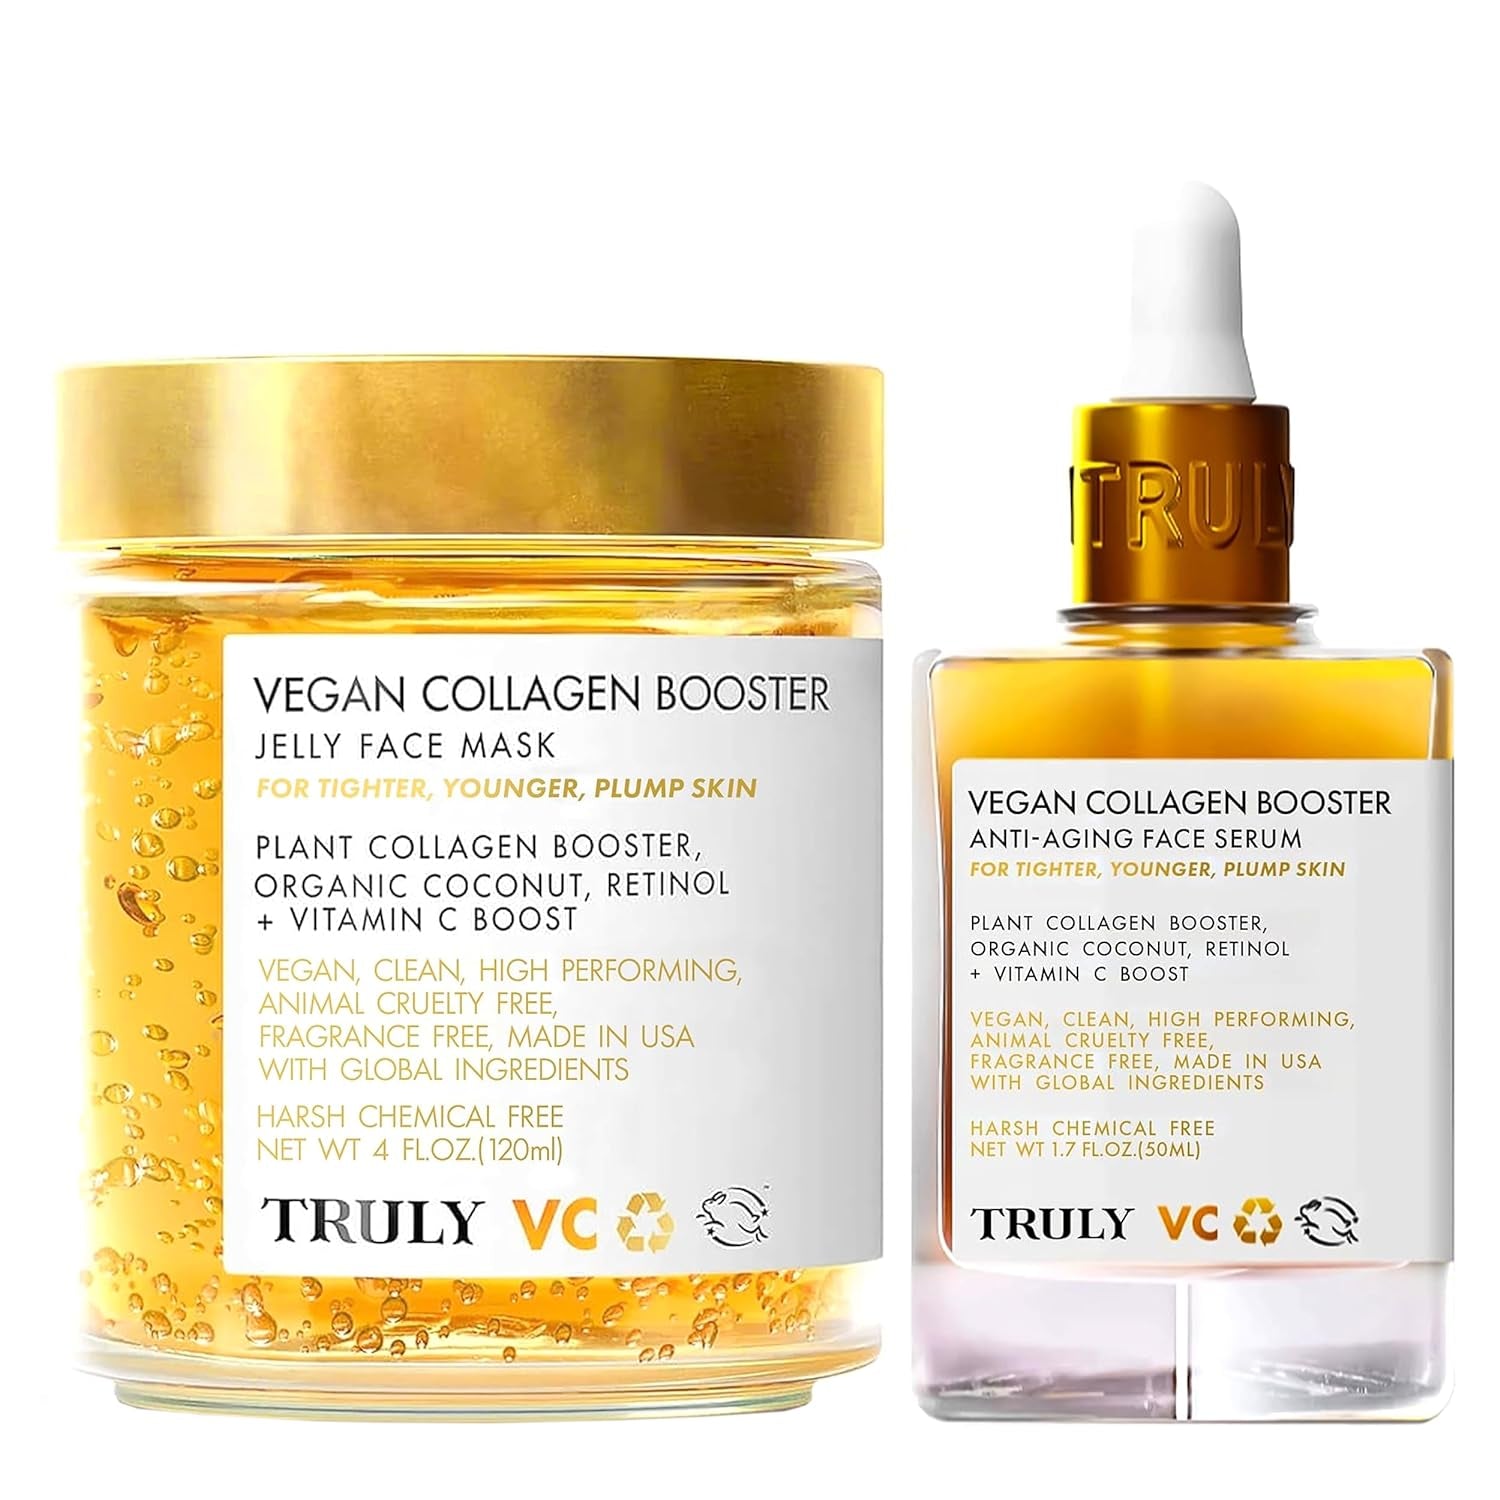 "Bundle: Truly Vegan Collagen Jelly Face Mask and Vegan Collagen Anti-Aging Serum"